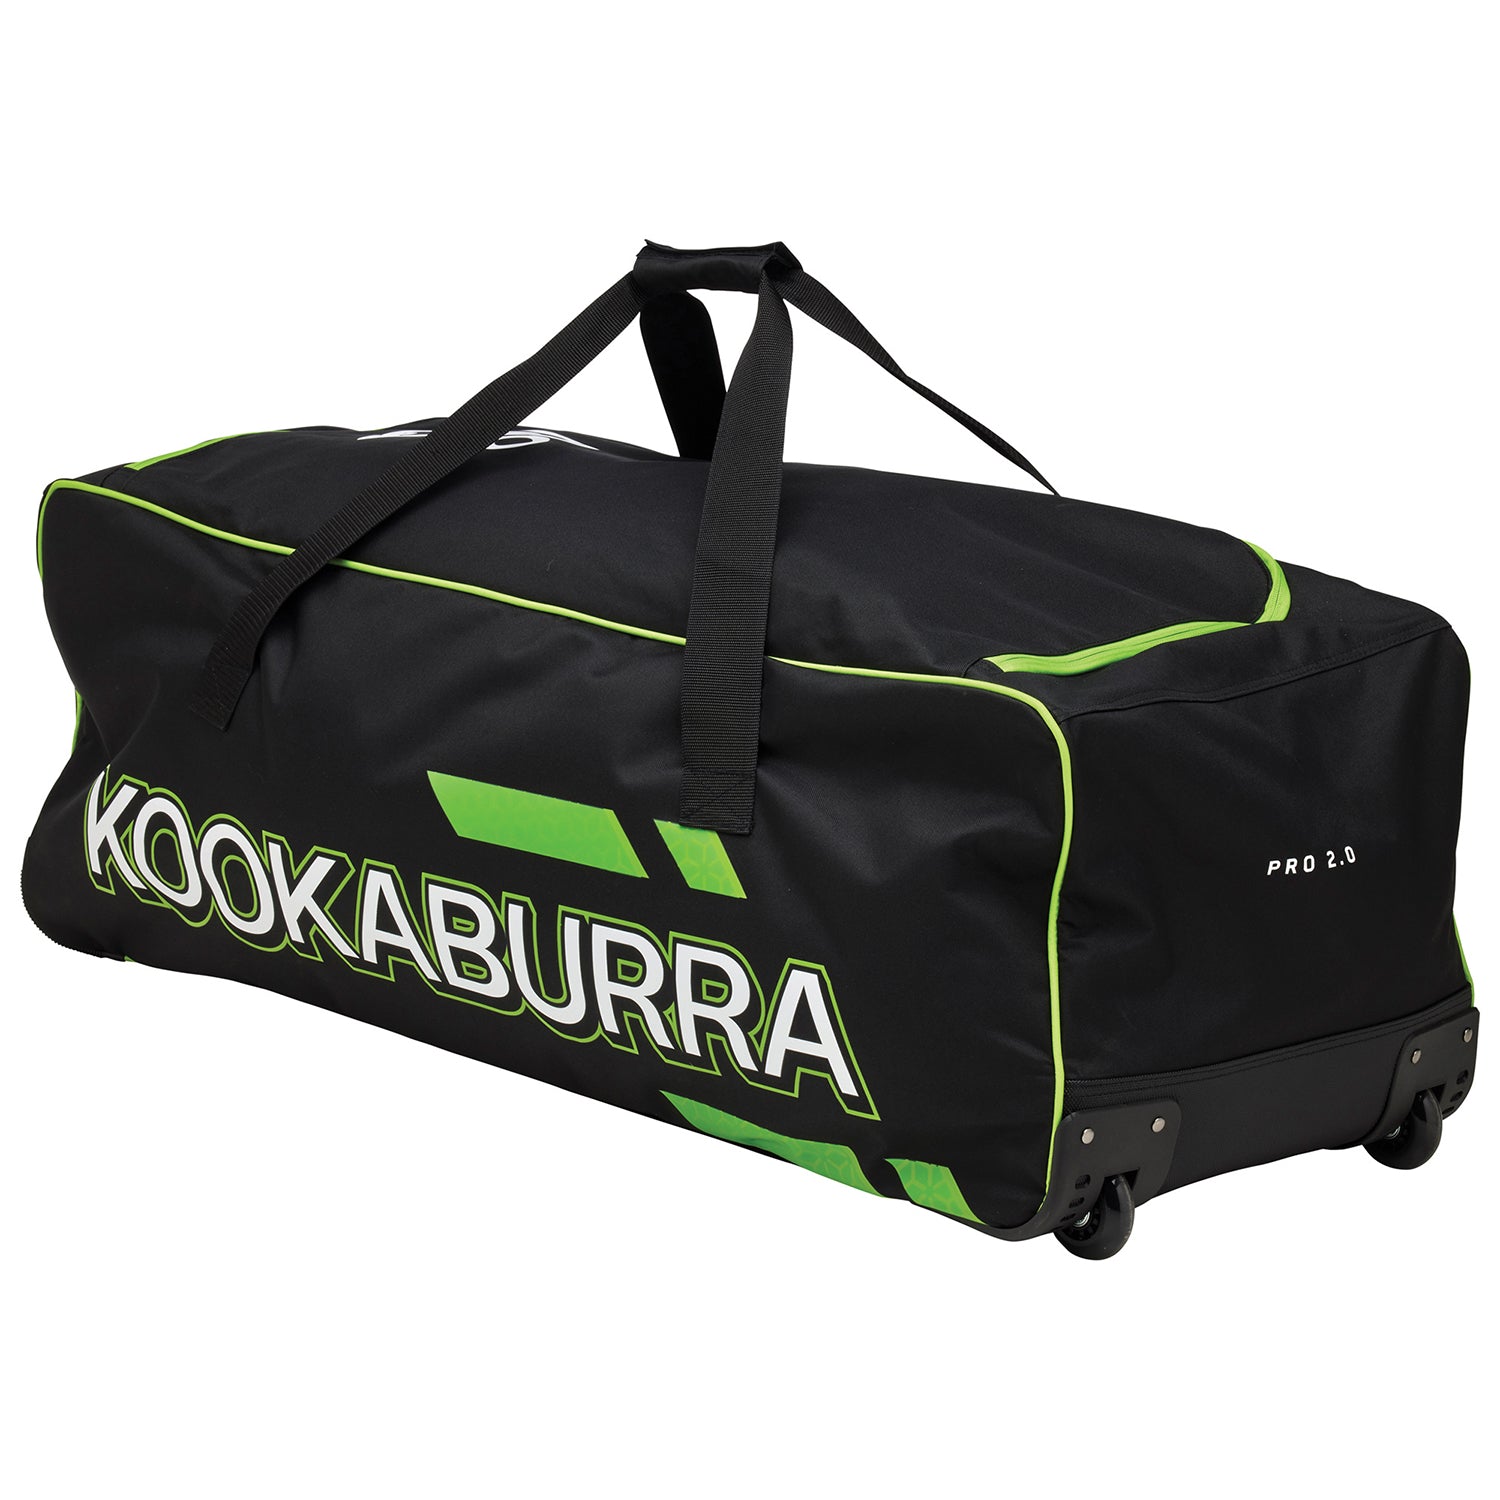 Kookaburra Pro 2.0 Cricket Wheelie Bag